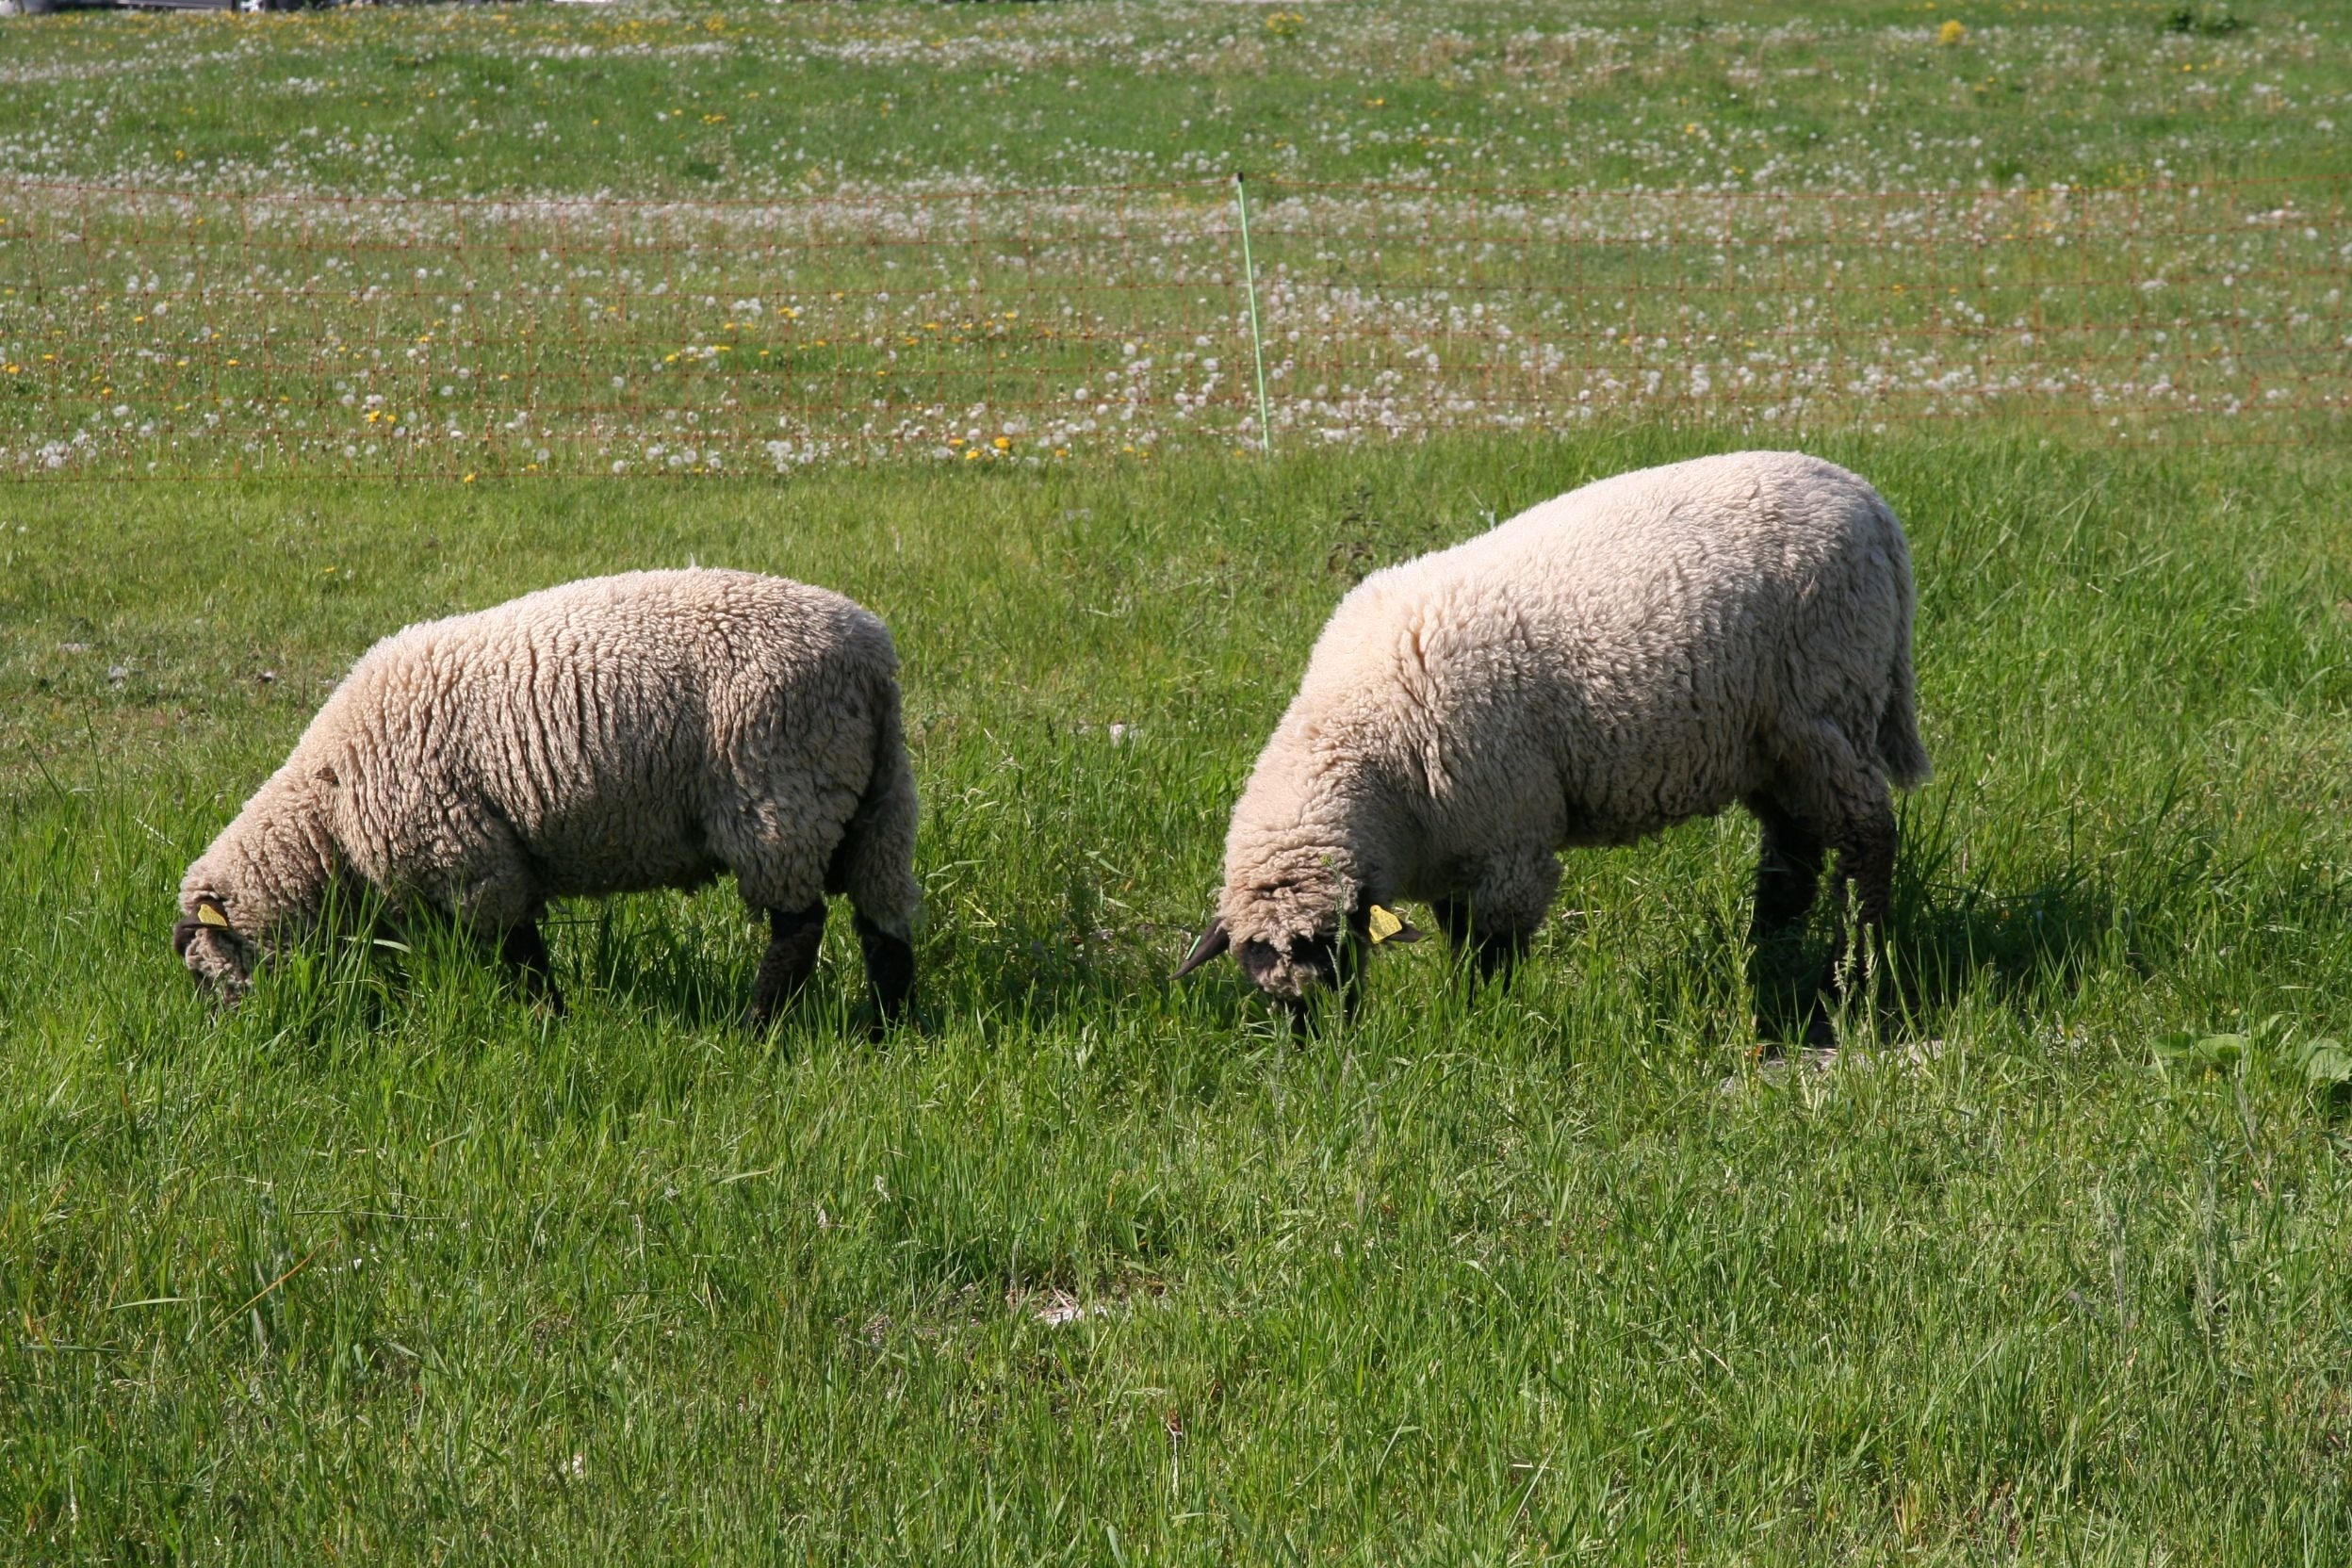 2 white sheep